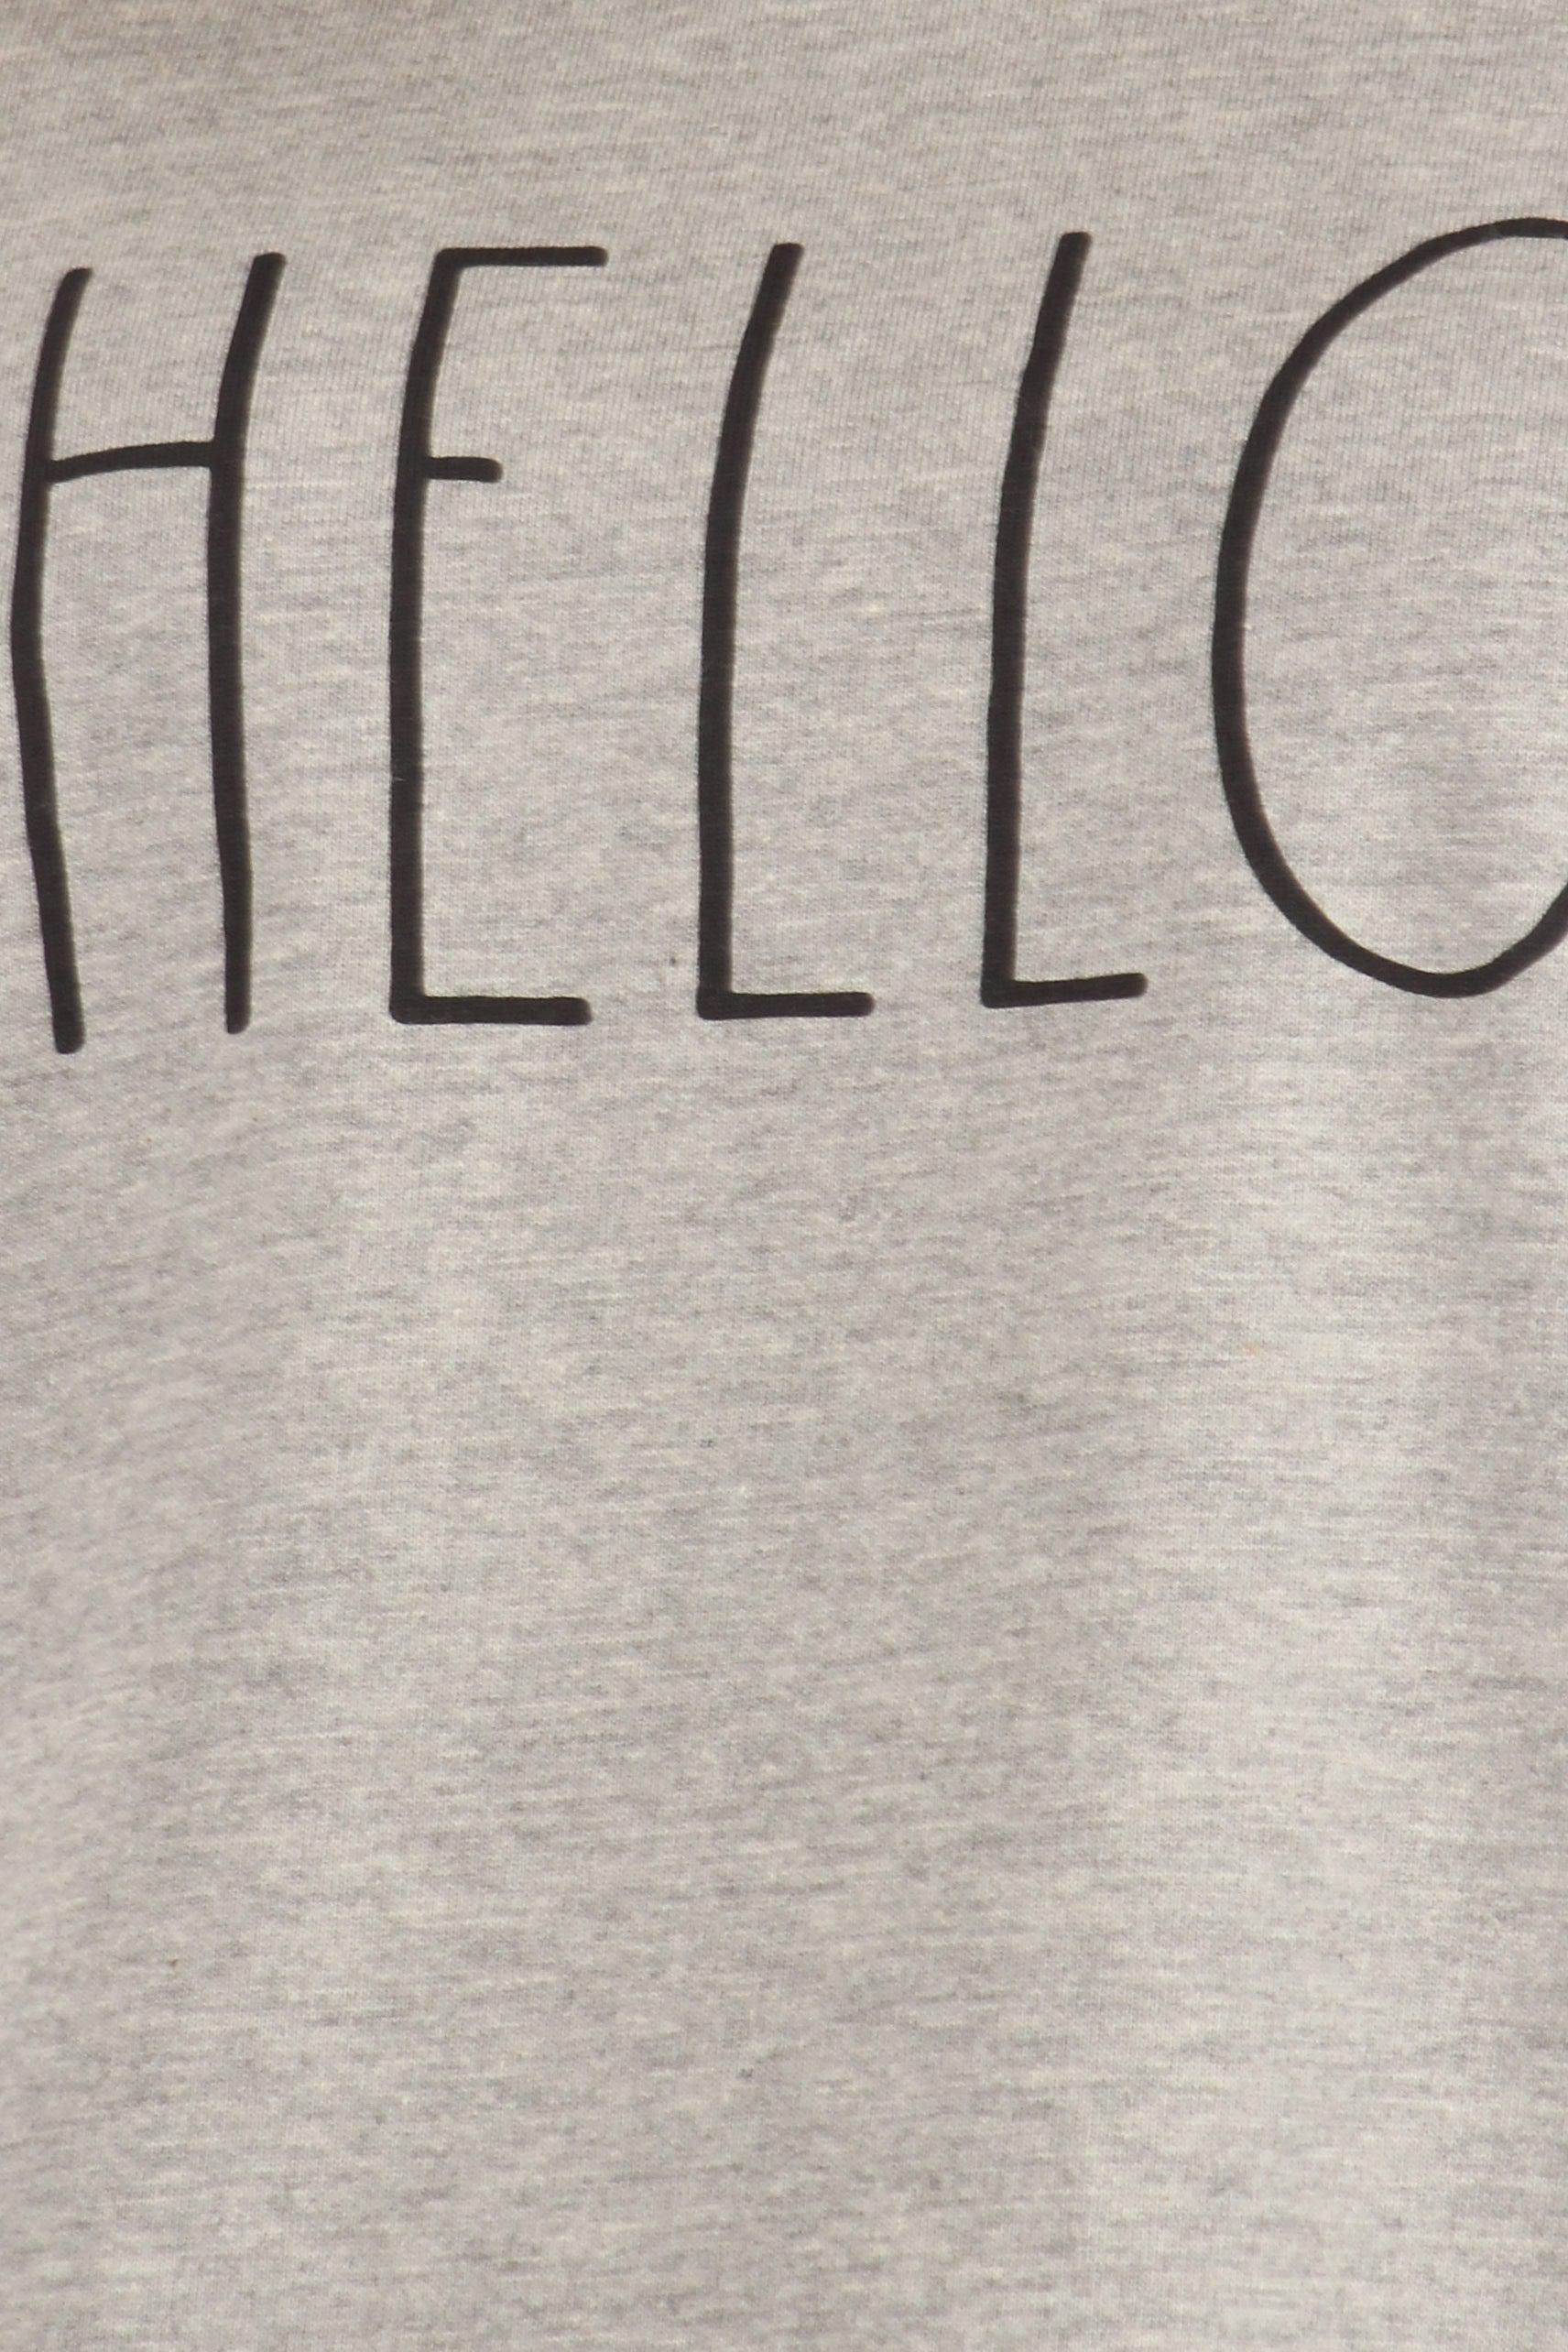 Women's "HELLO" Short Sleeve Icon T-Shirt - Shop Rae Dunn Apparel and Sleepwear